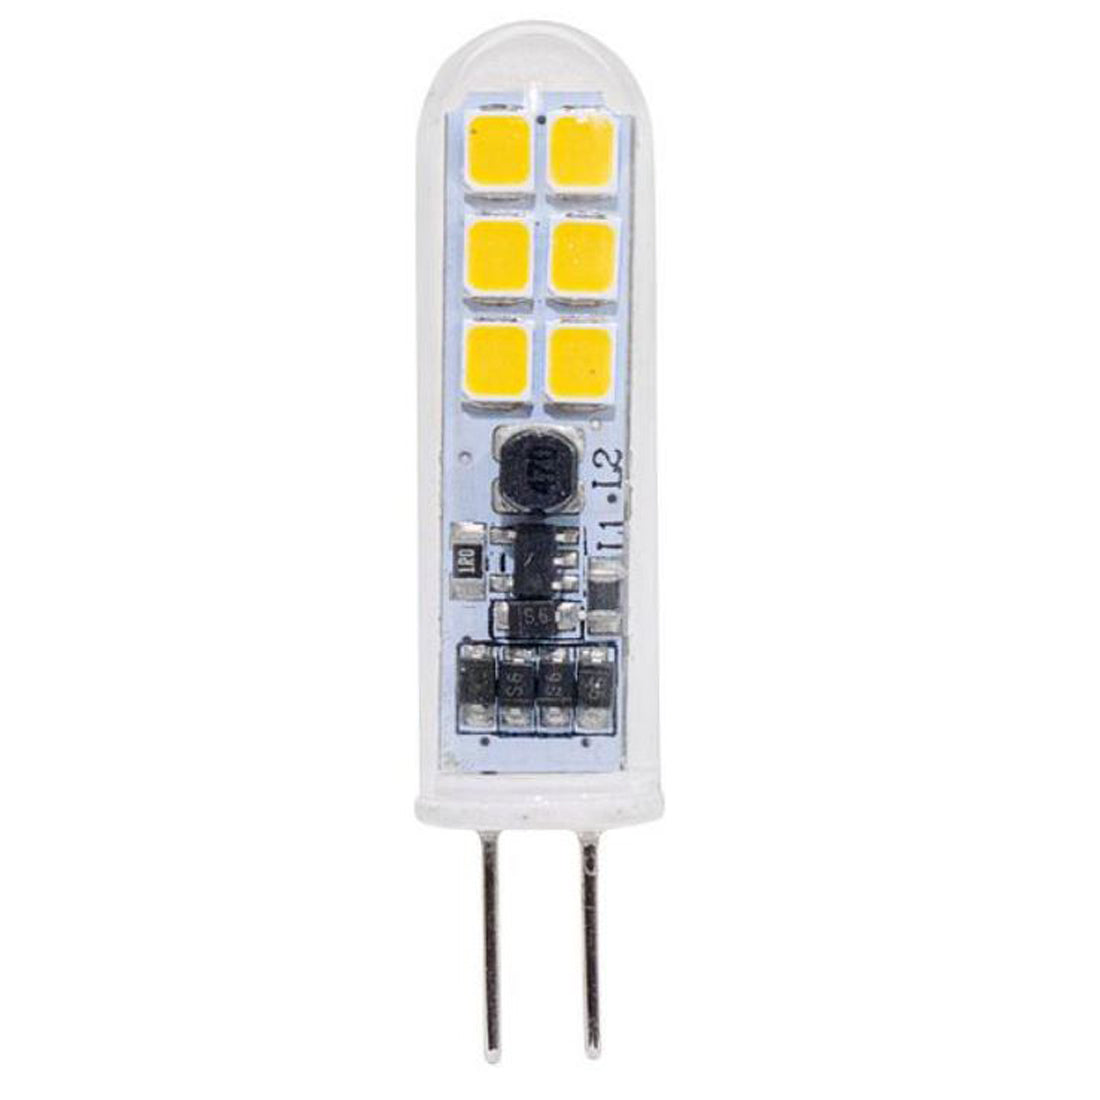 Life Lampadina a LED, attacco G4, luce fredda 6000K, 1.9W, 225 lm, Ø10x41mm, accensione istantanea